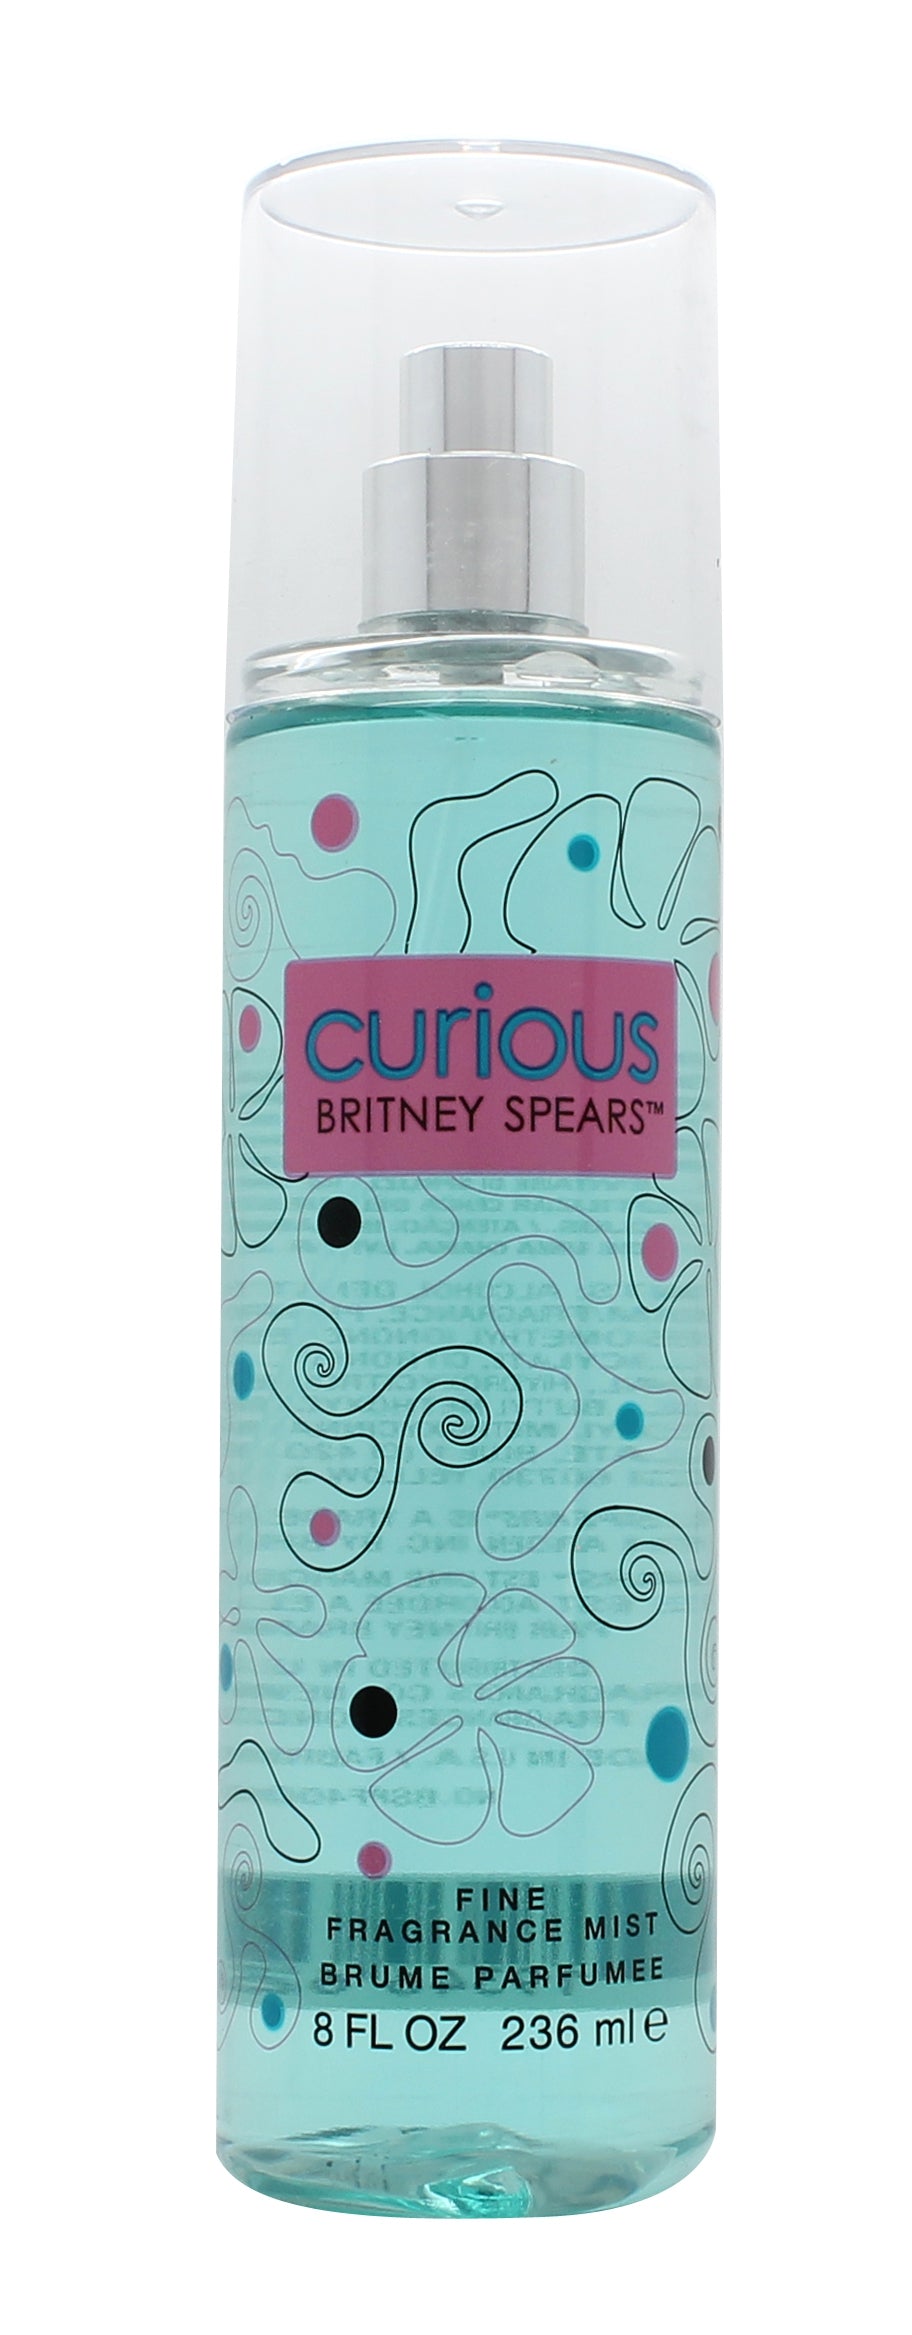 View Britney Spears Curious Fine Fragrance Mist 236ml Spray information